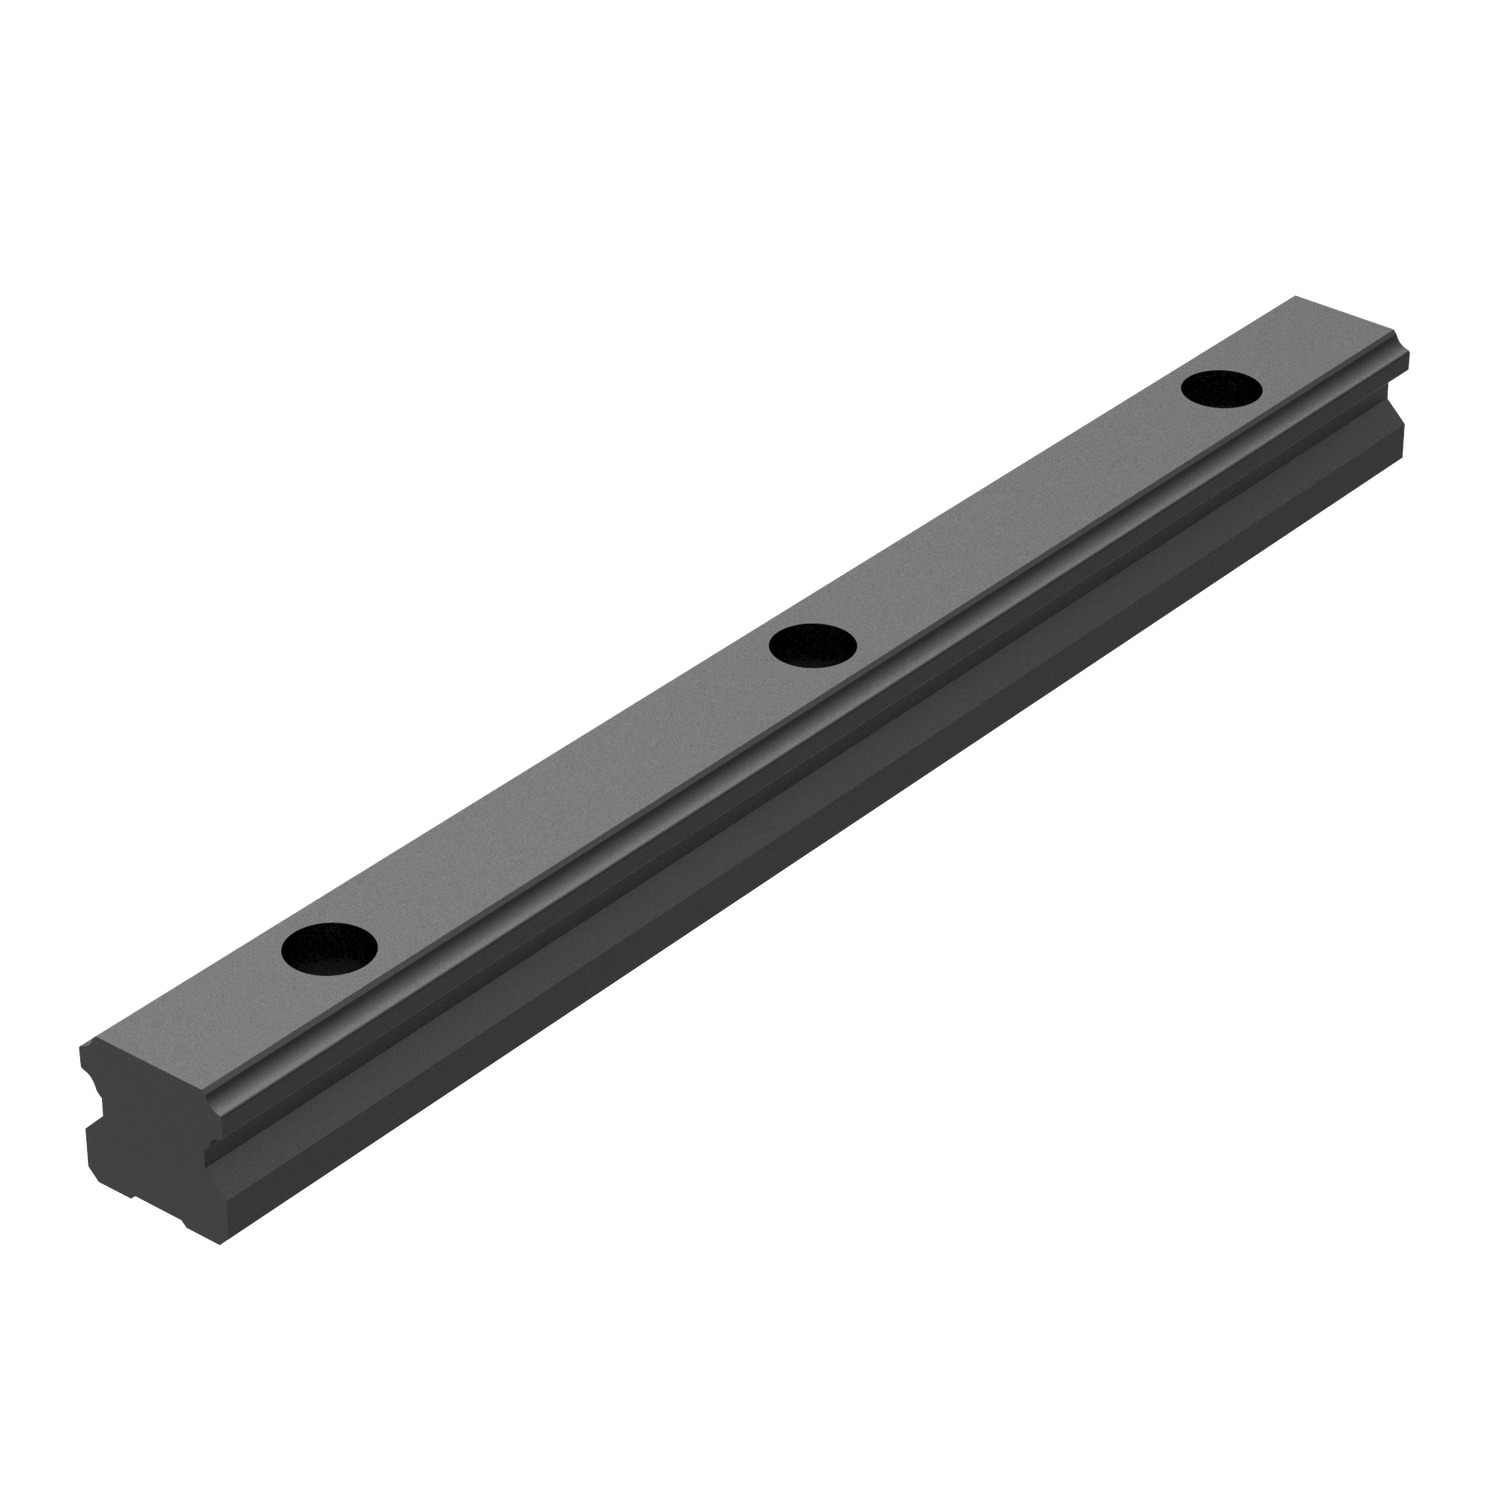 L1016.BL20-0220 Black Linear guide rail 20mm 220 Black Oxide